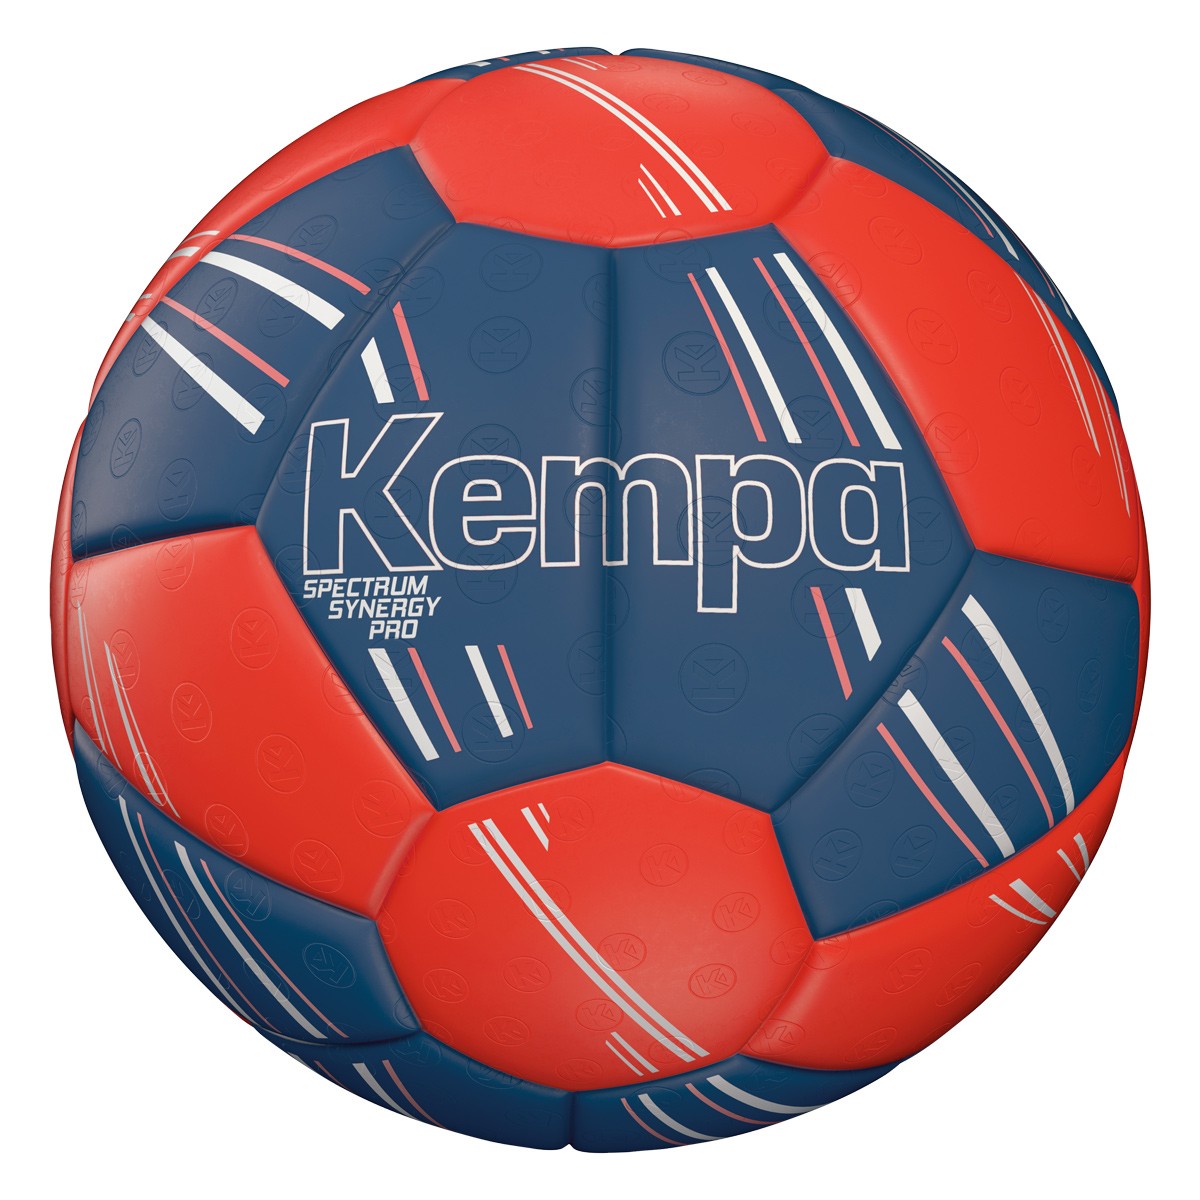 Kempa Handball Spectrum Synergy Pro